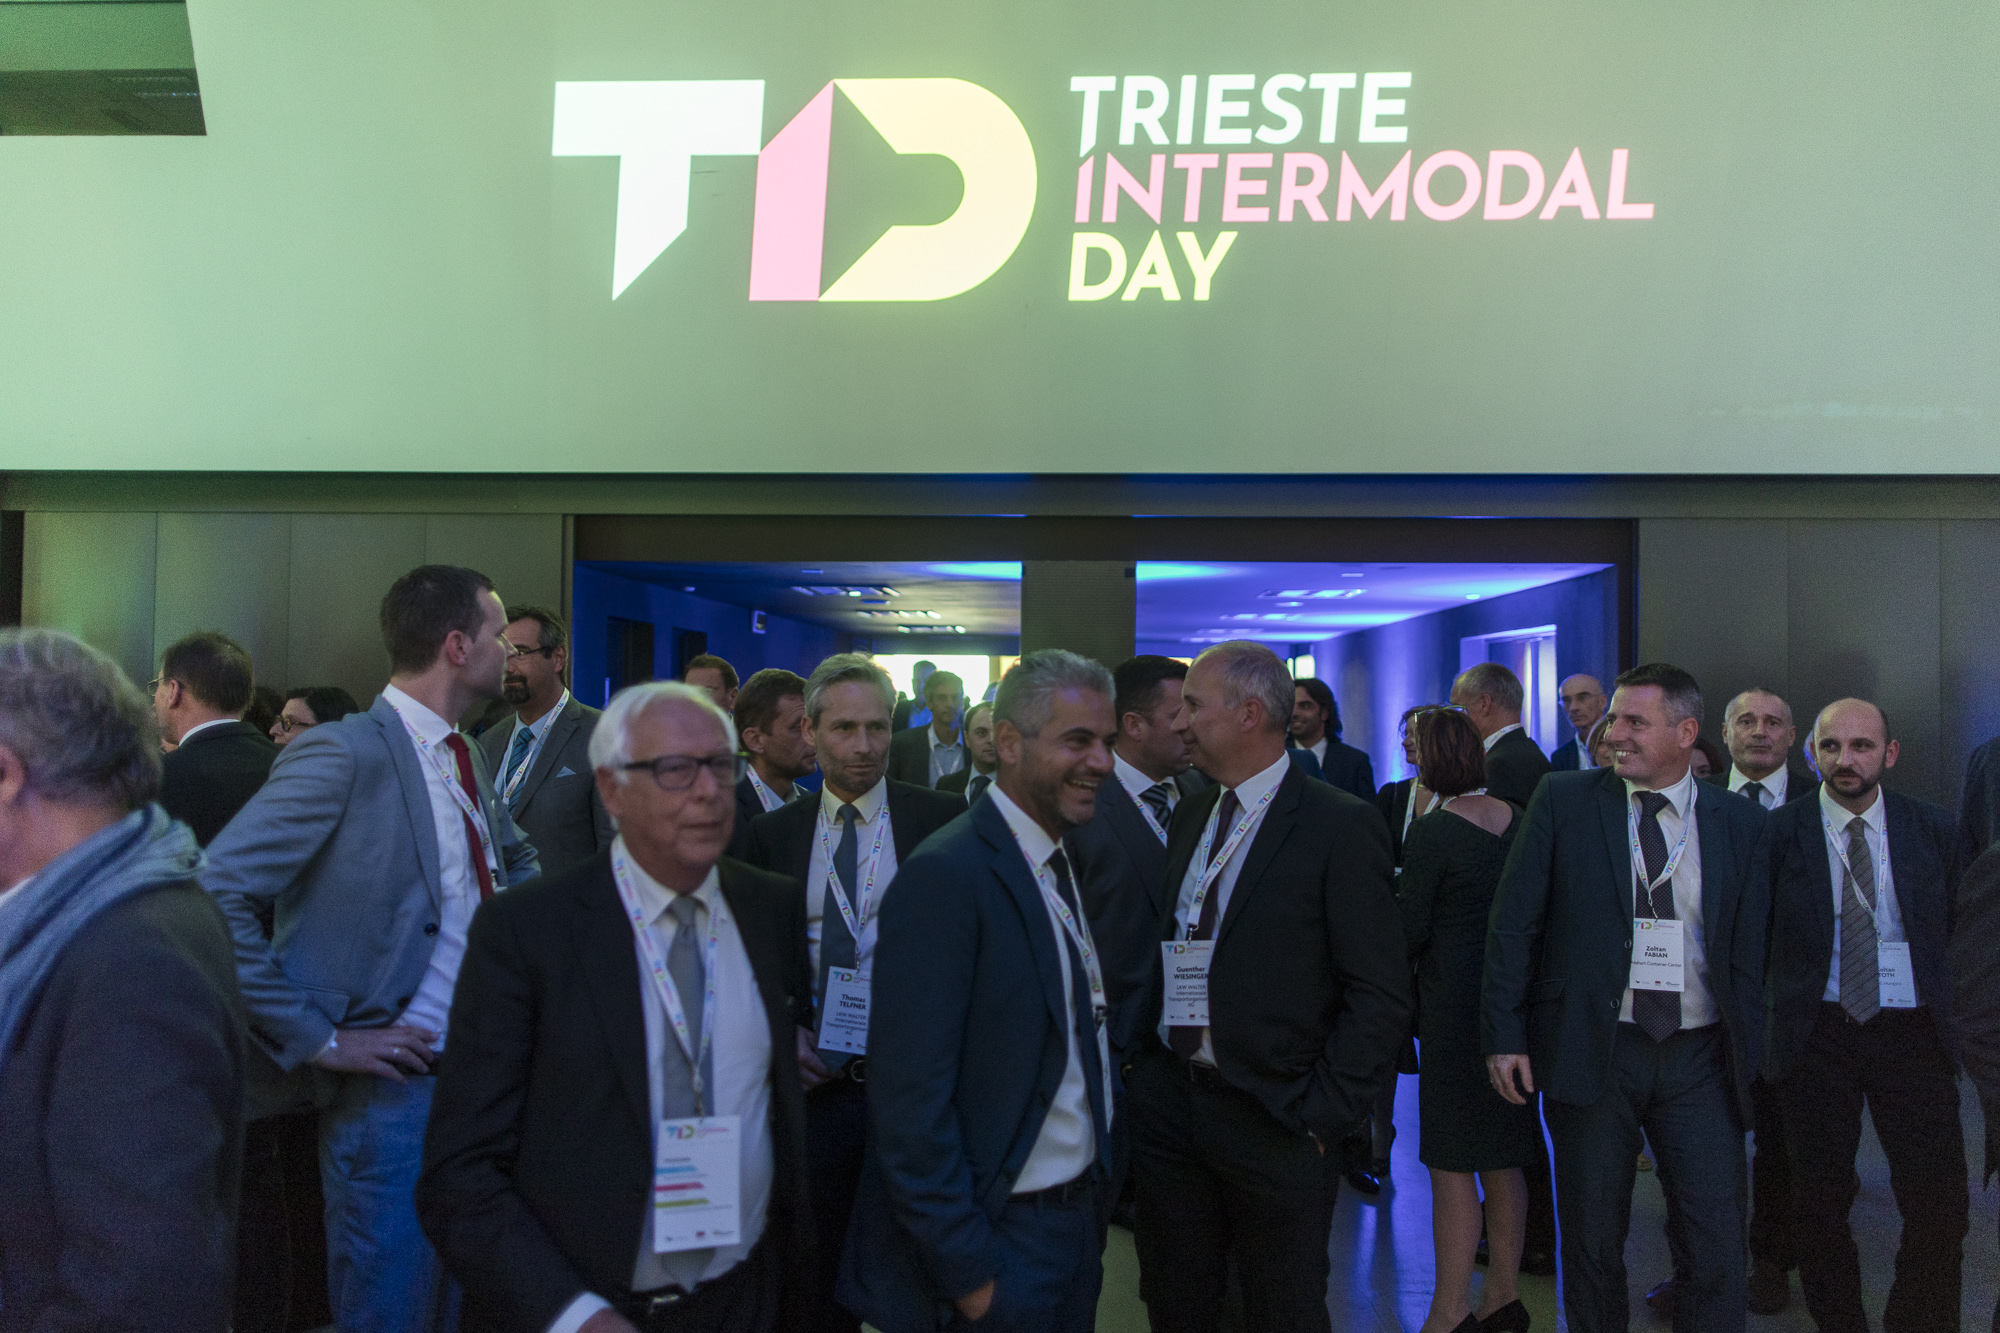 Trieste Intermodal day